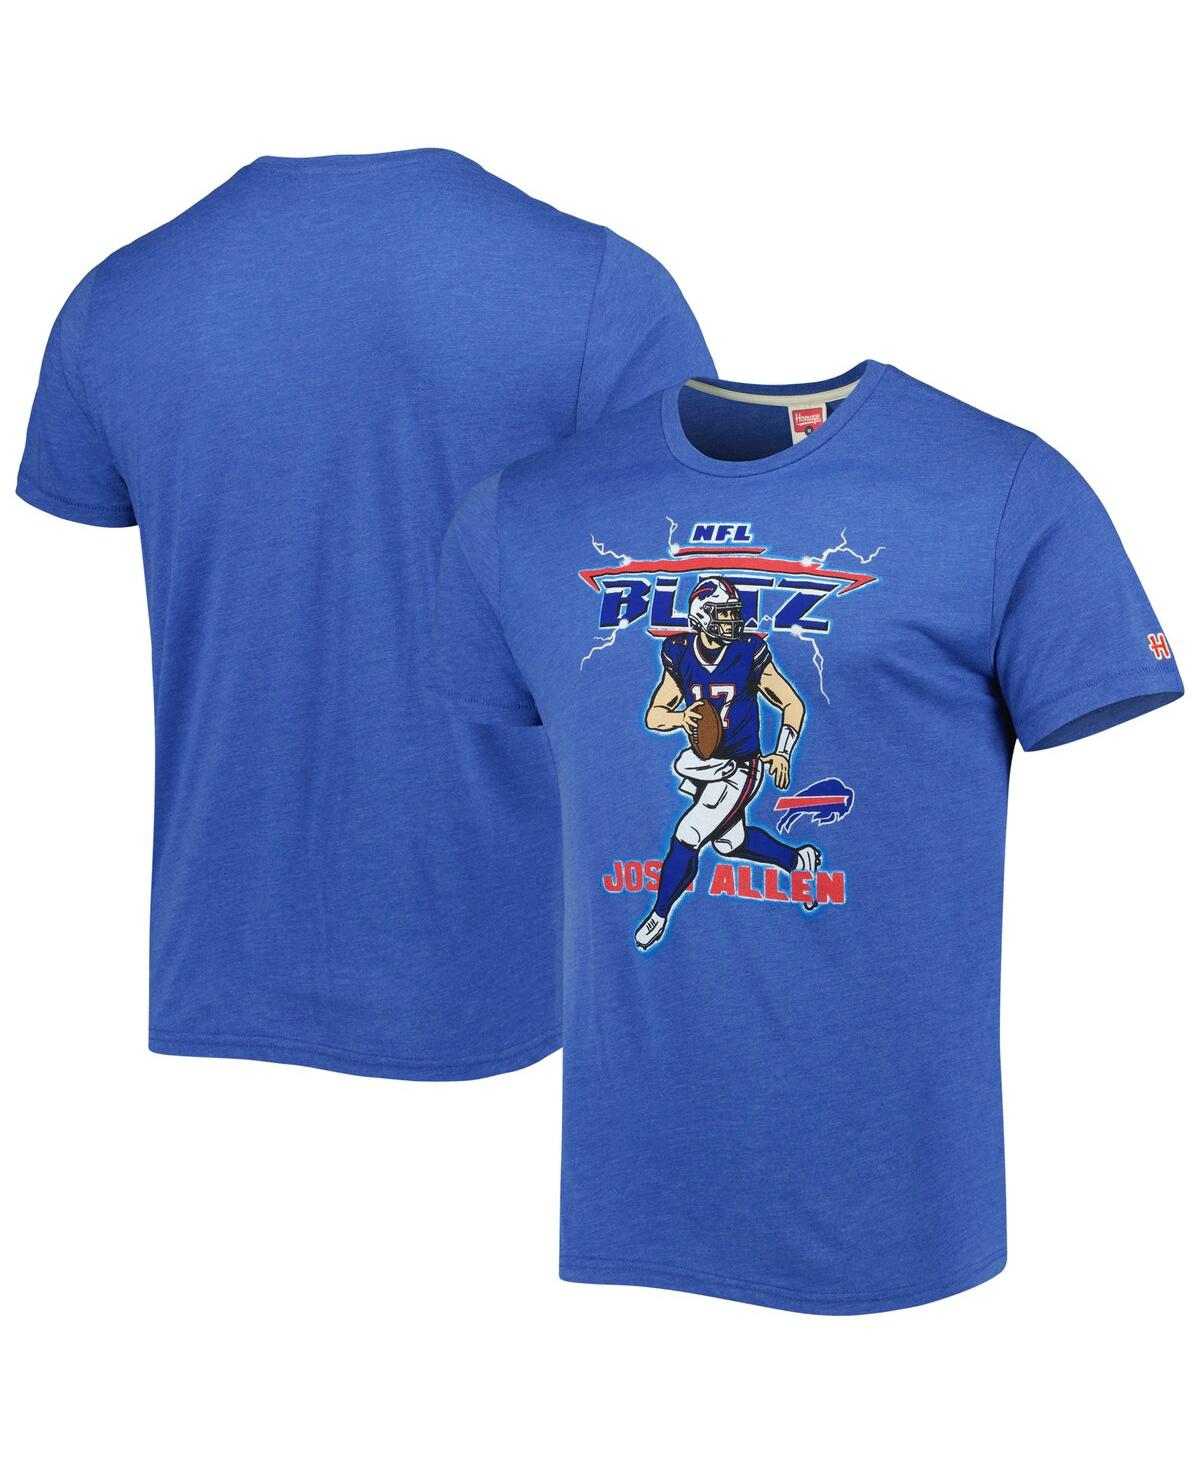 Men's Homage Josh Allen Heathered Royal Buffalo Bills Nfl Blitz Player Tri-Blend T-shirt - Heathered Royal